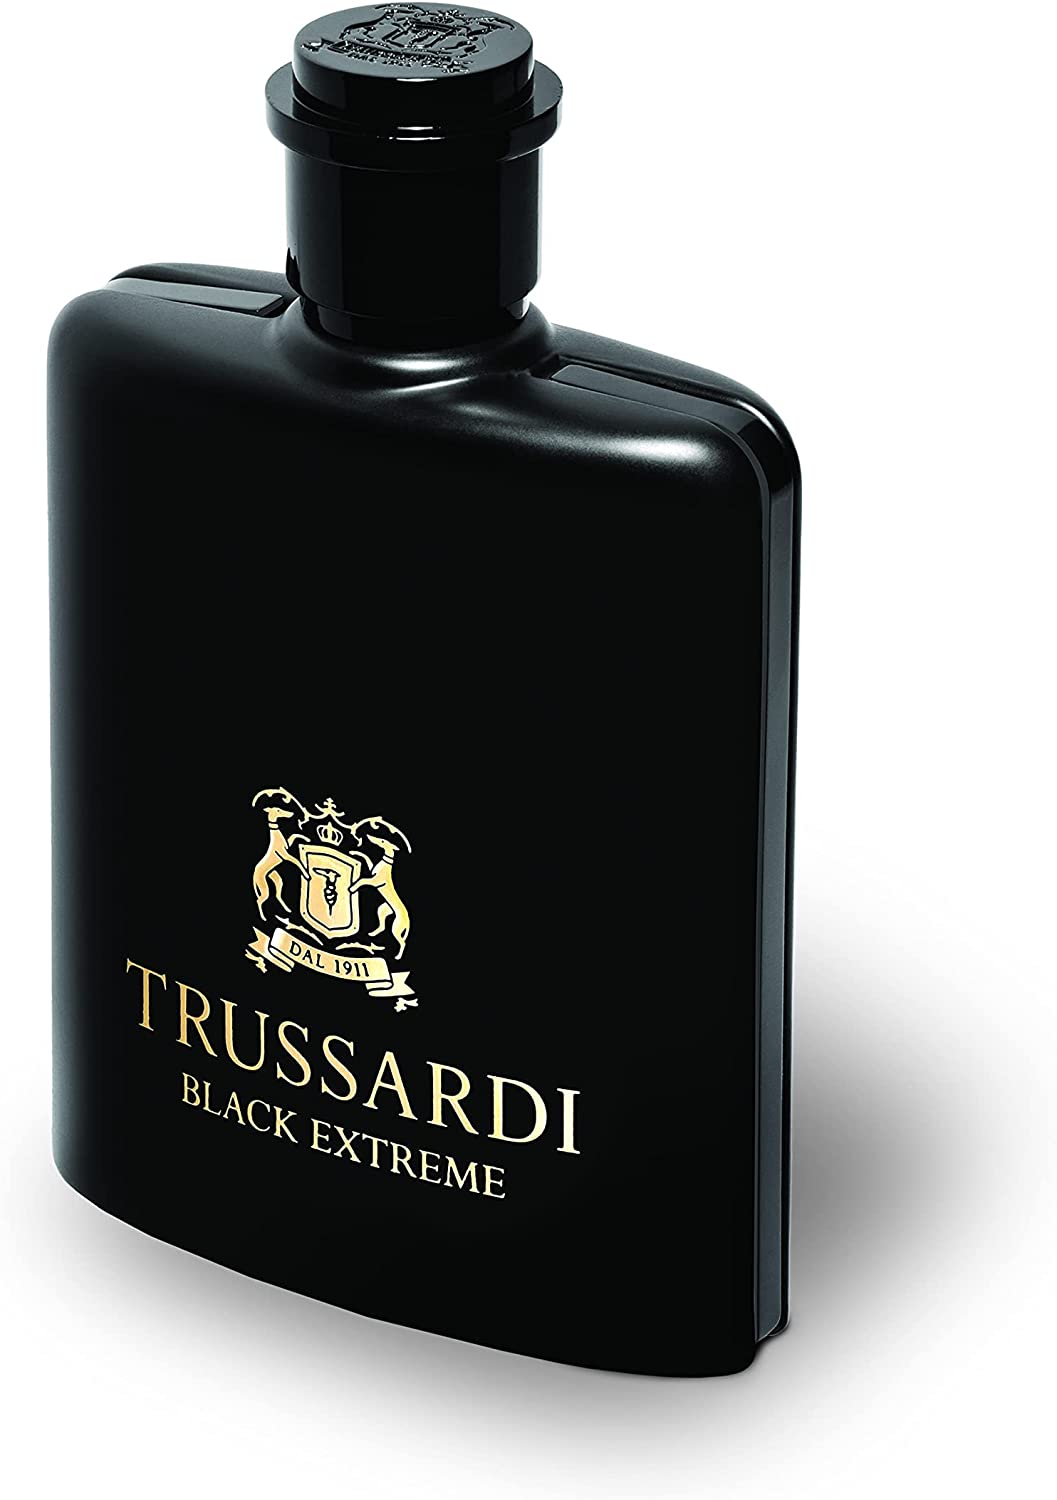 TRUSSARDI BLACK EXTREME EDT 100 ml spray